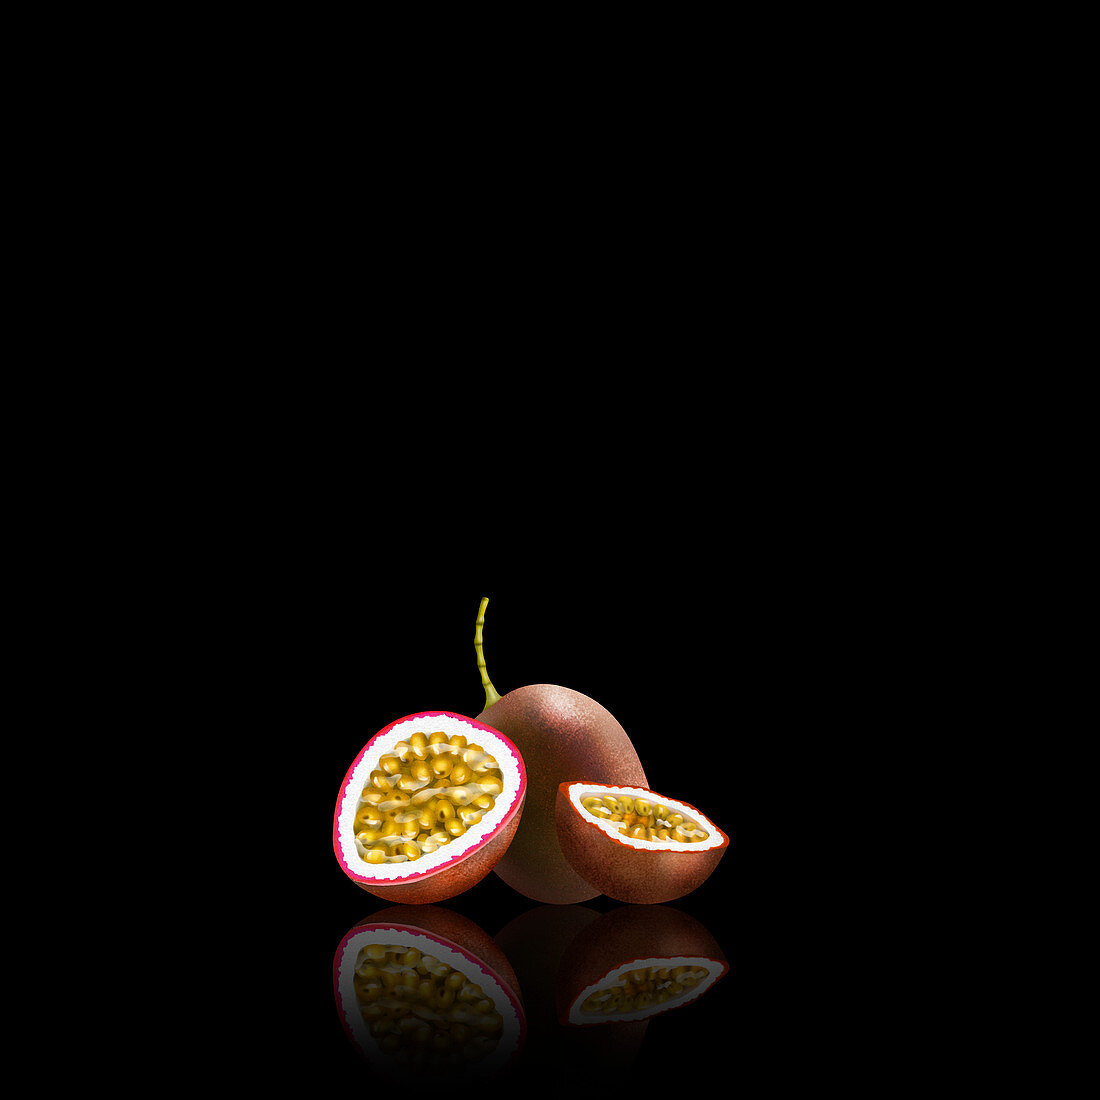 Fresh passionfruit whole and halved, illustration